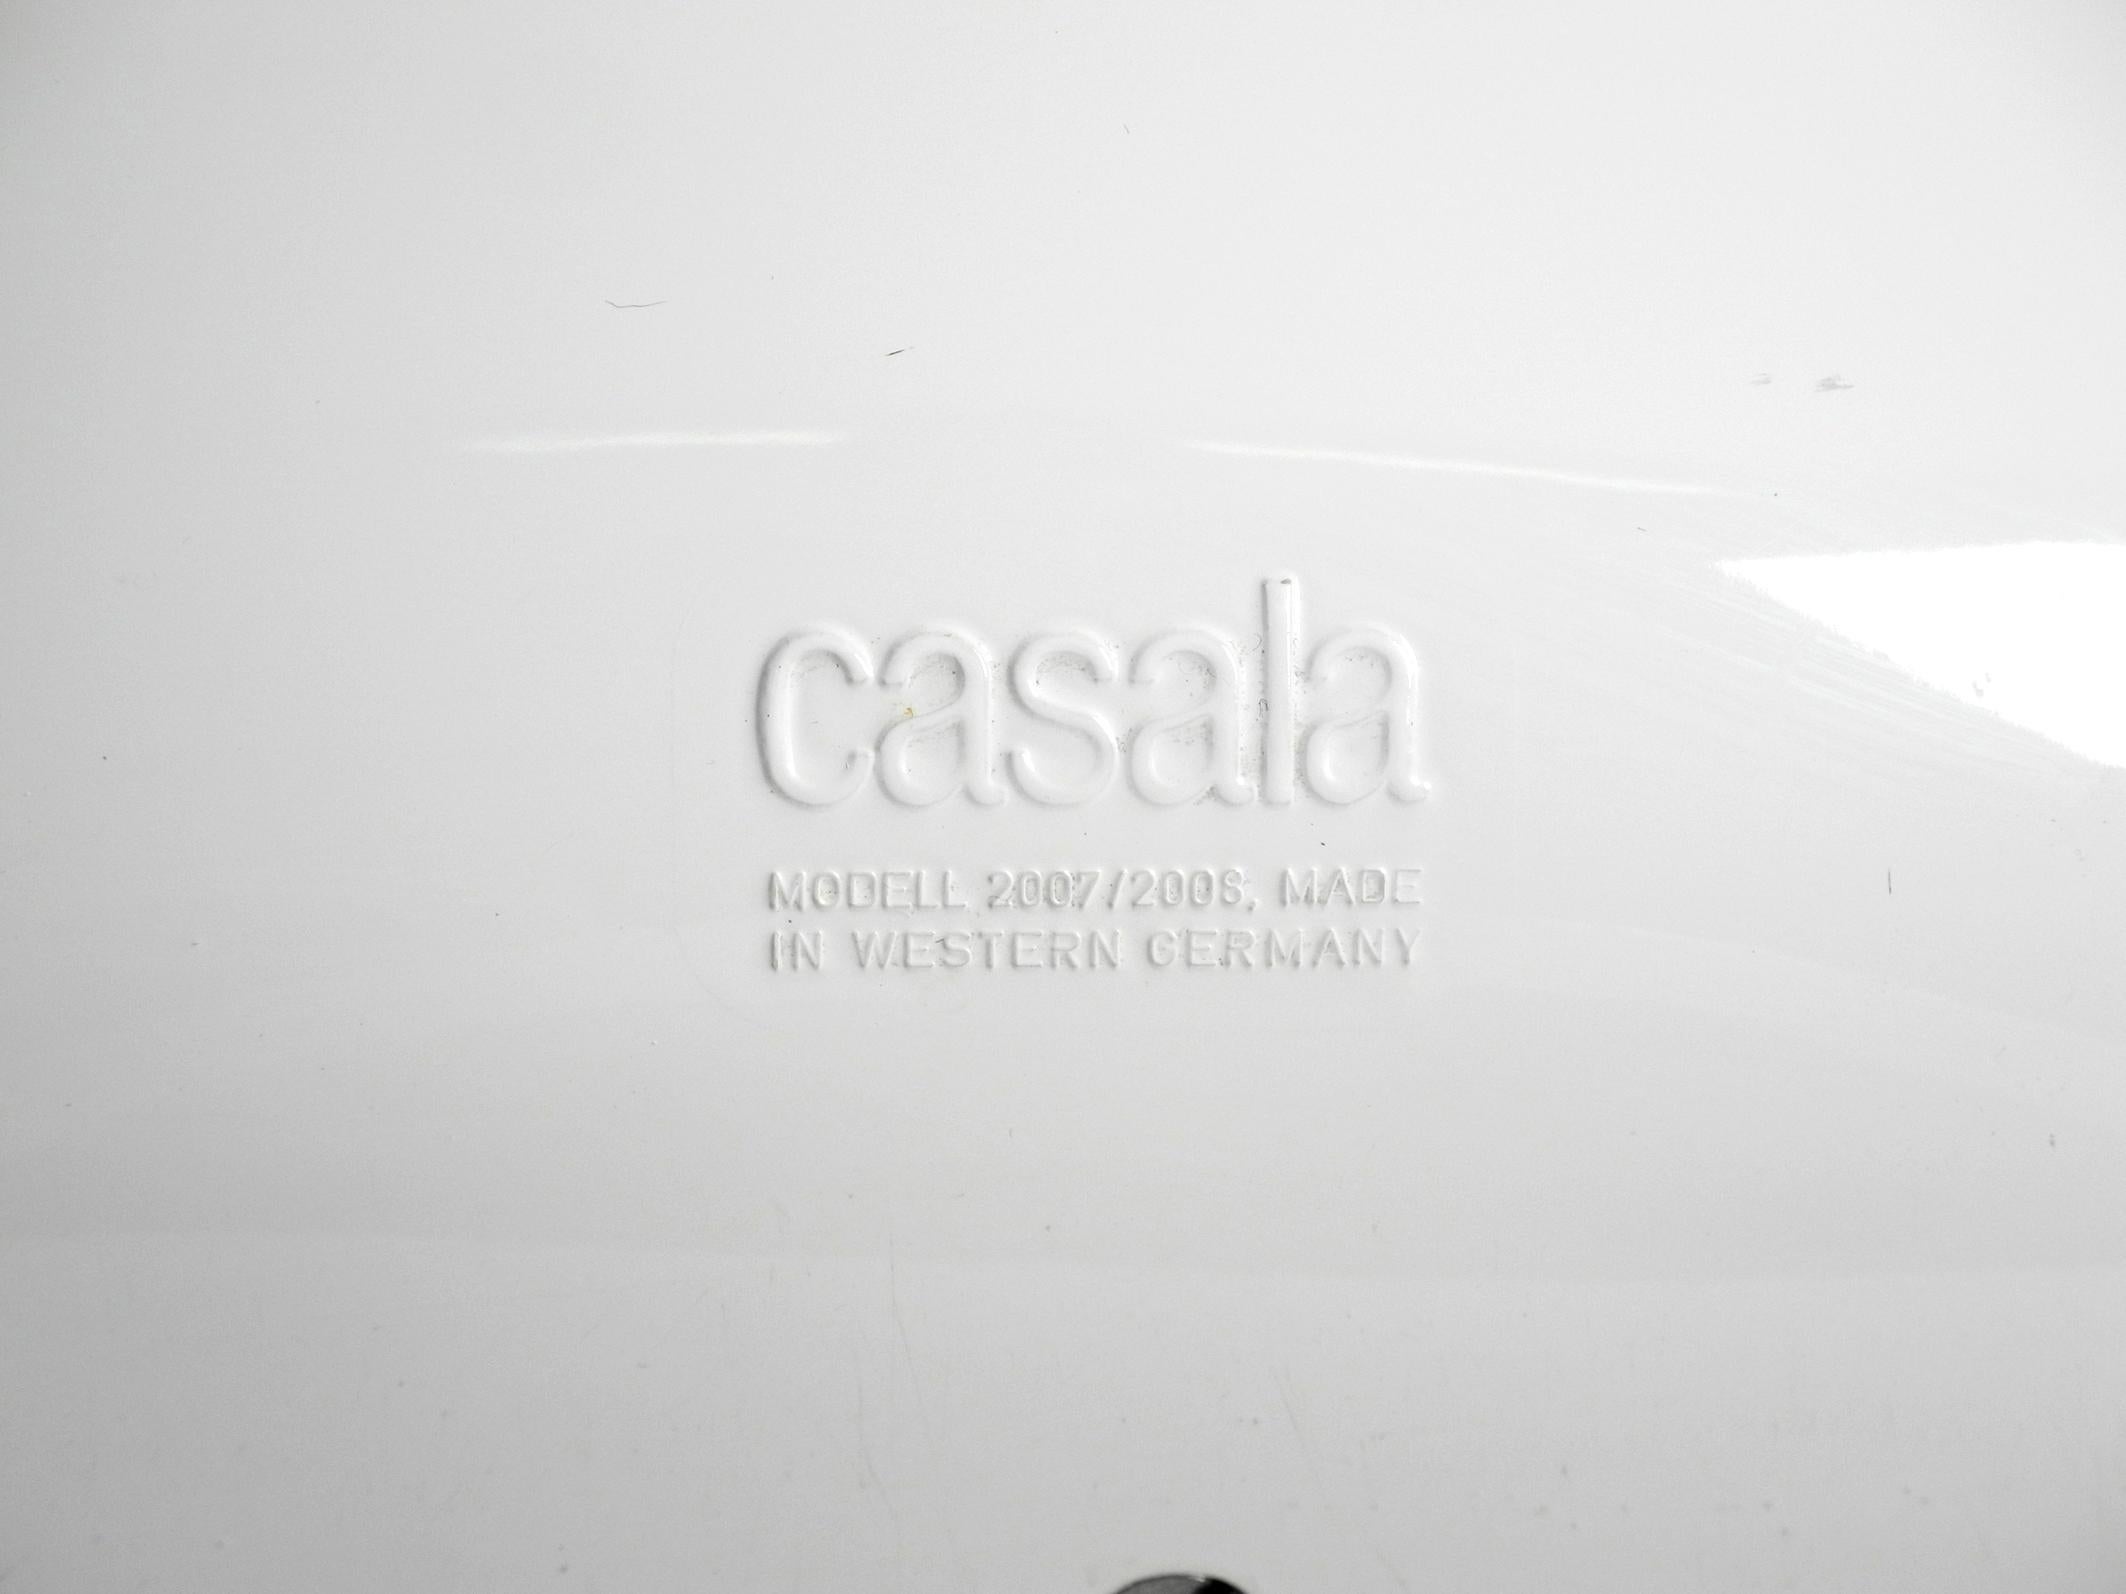 Pair of shiny Casalino Armchairs by Casala model 2007/2008 from January 1974 2